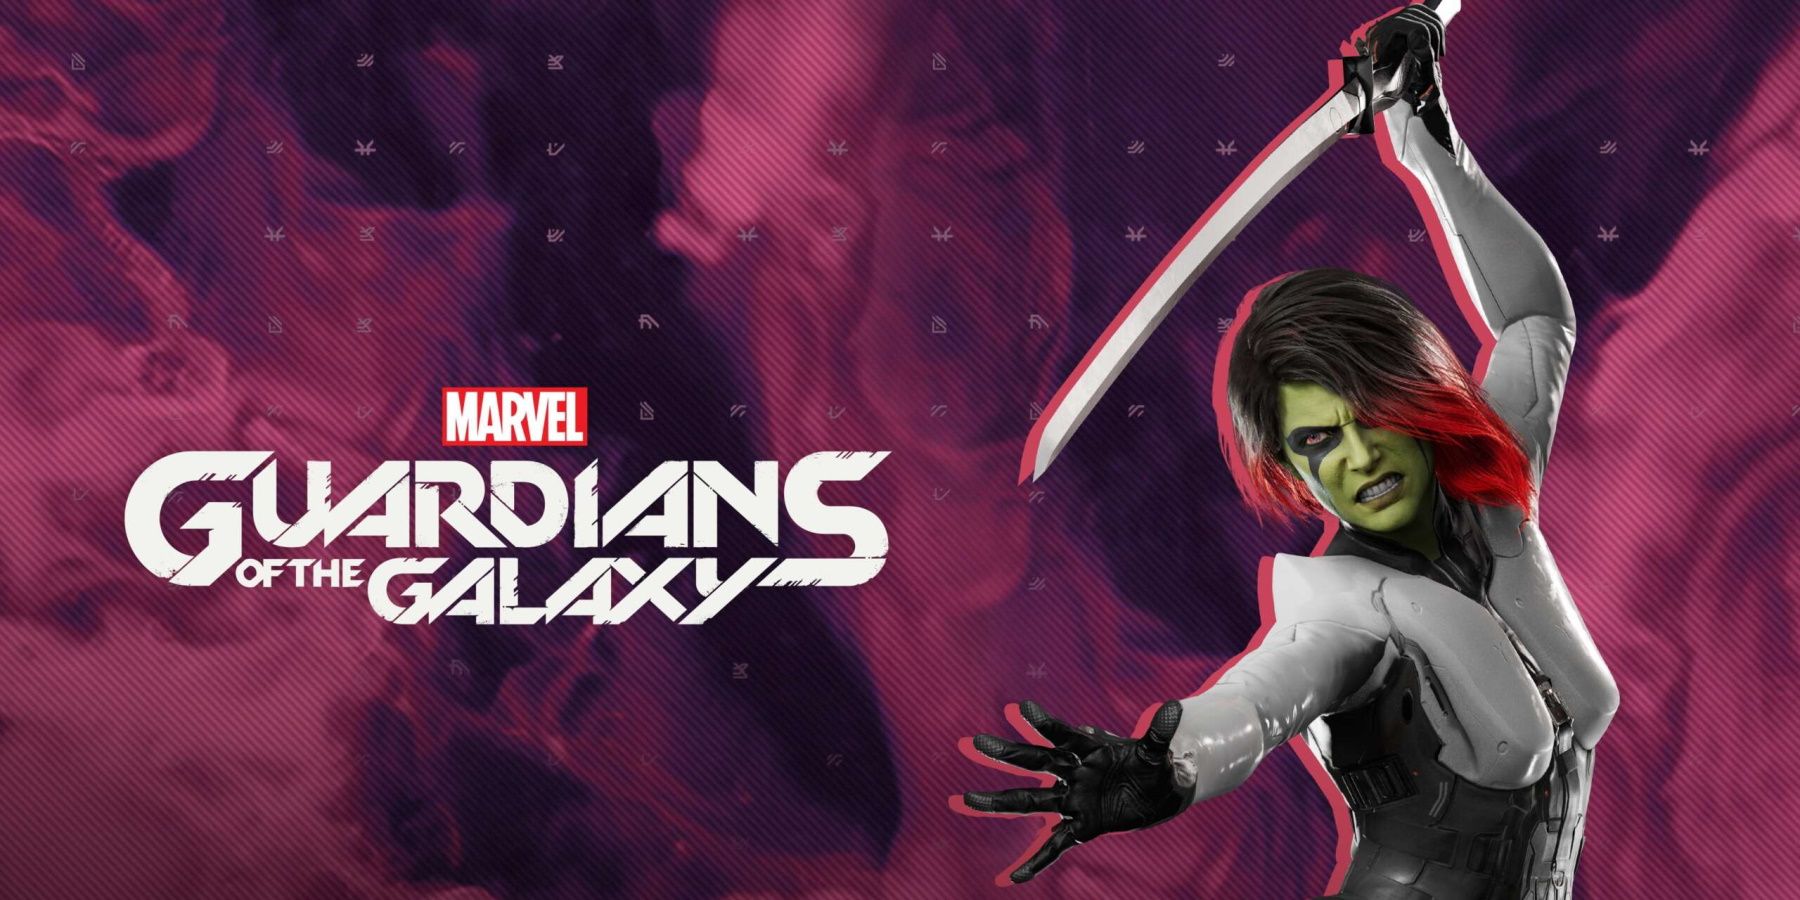 Marvel’s Guardians of the Galaxy gamora promotiona artwork